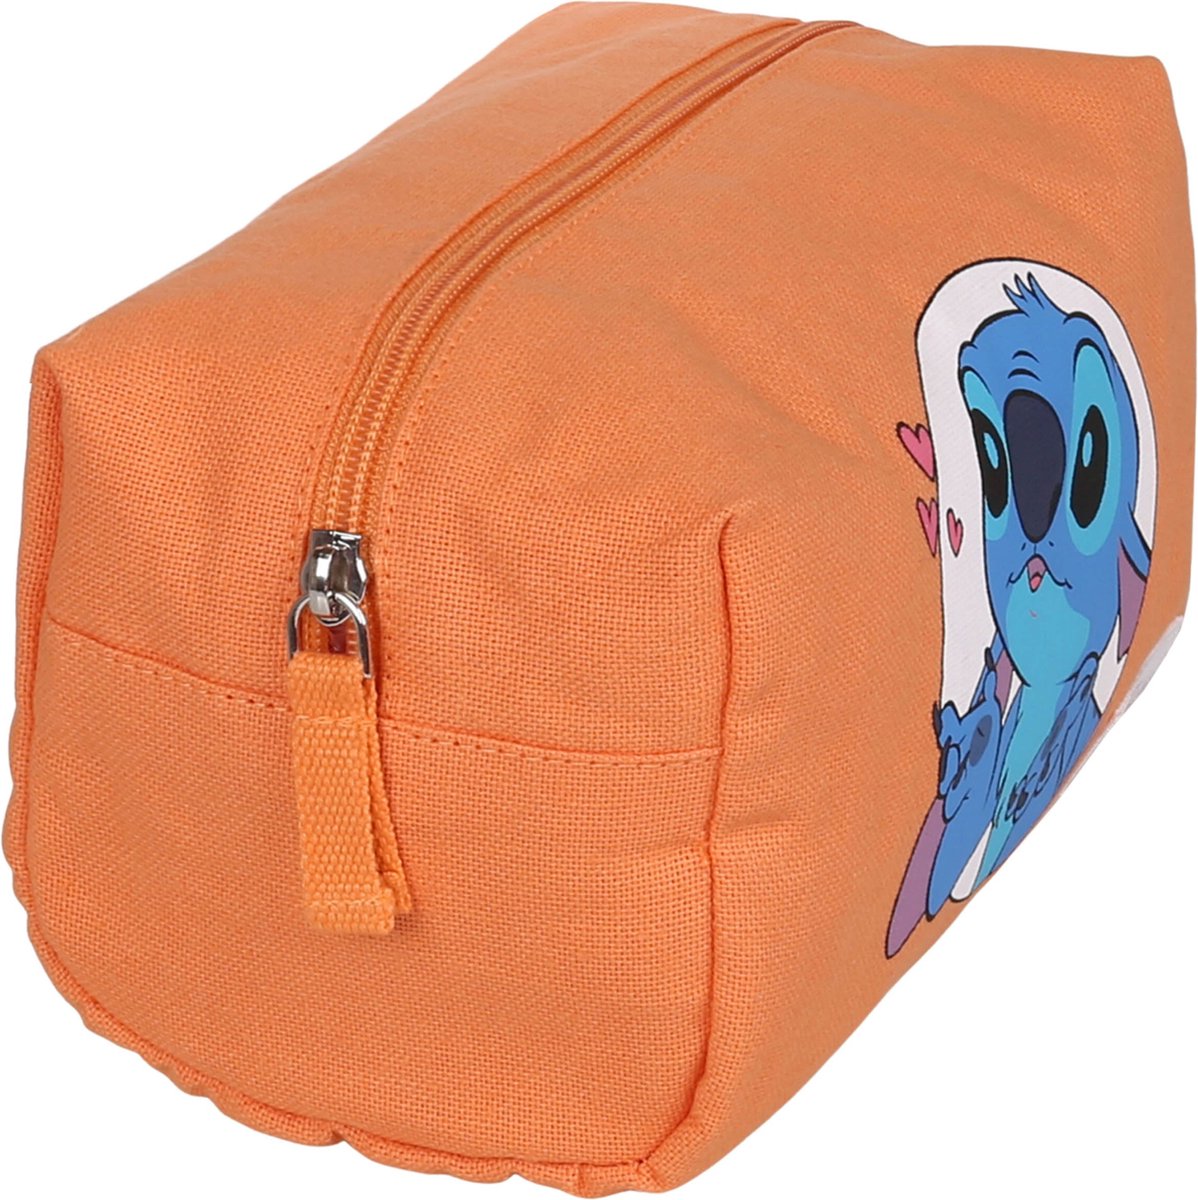 Stitch Disney - Sac de plage/shopping transparent, grand sac à bandoulière  47x35x10cm